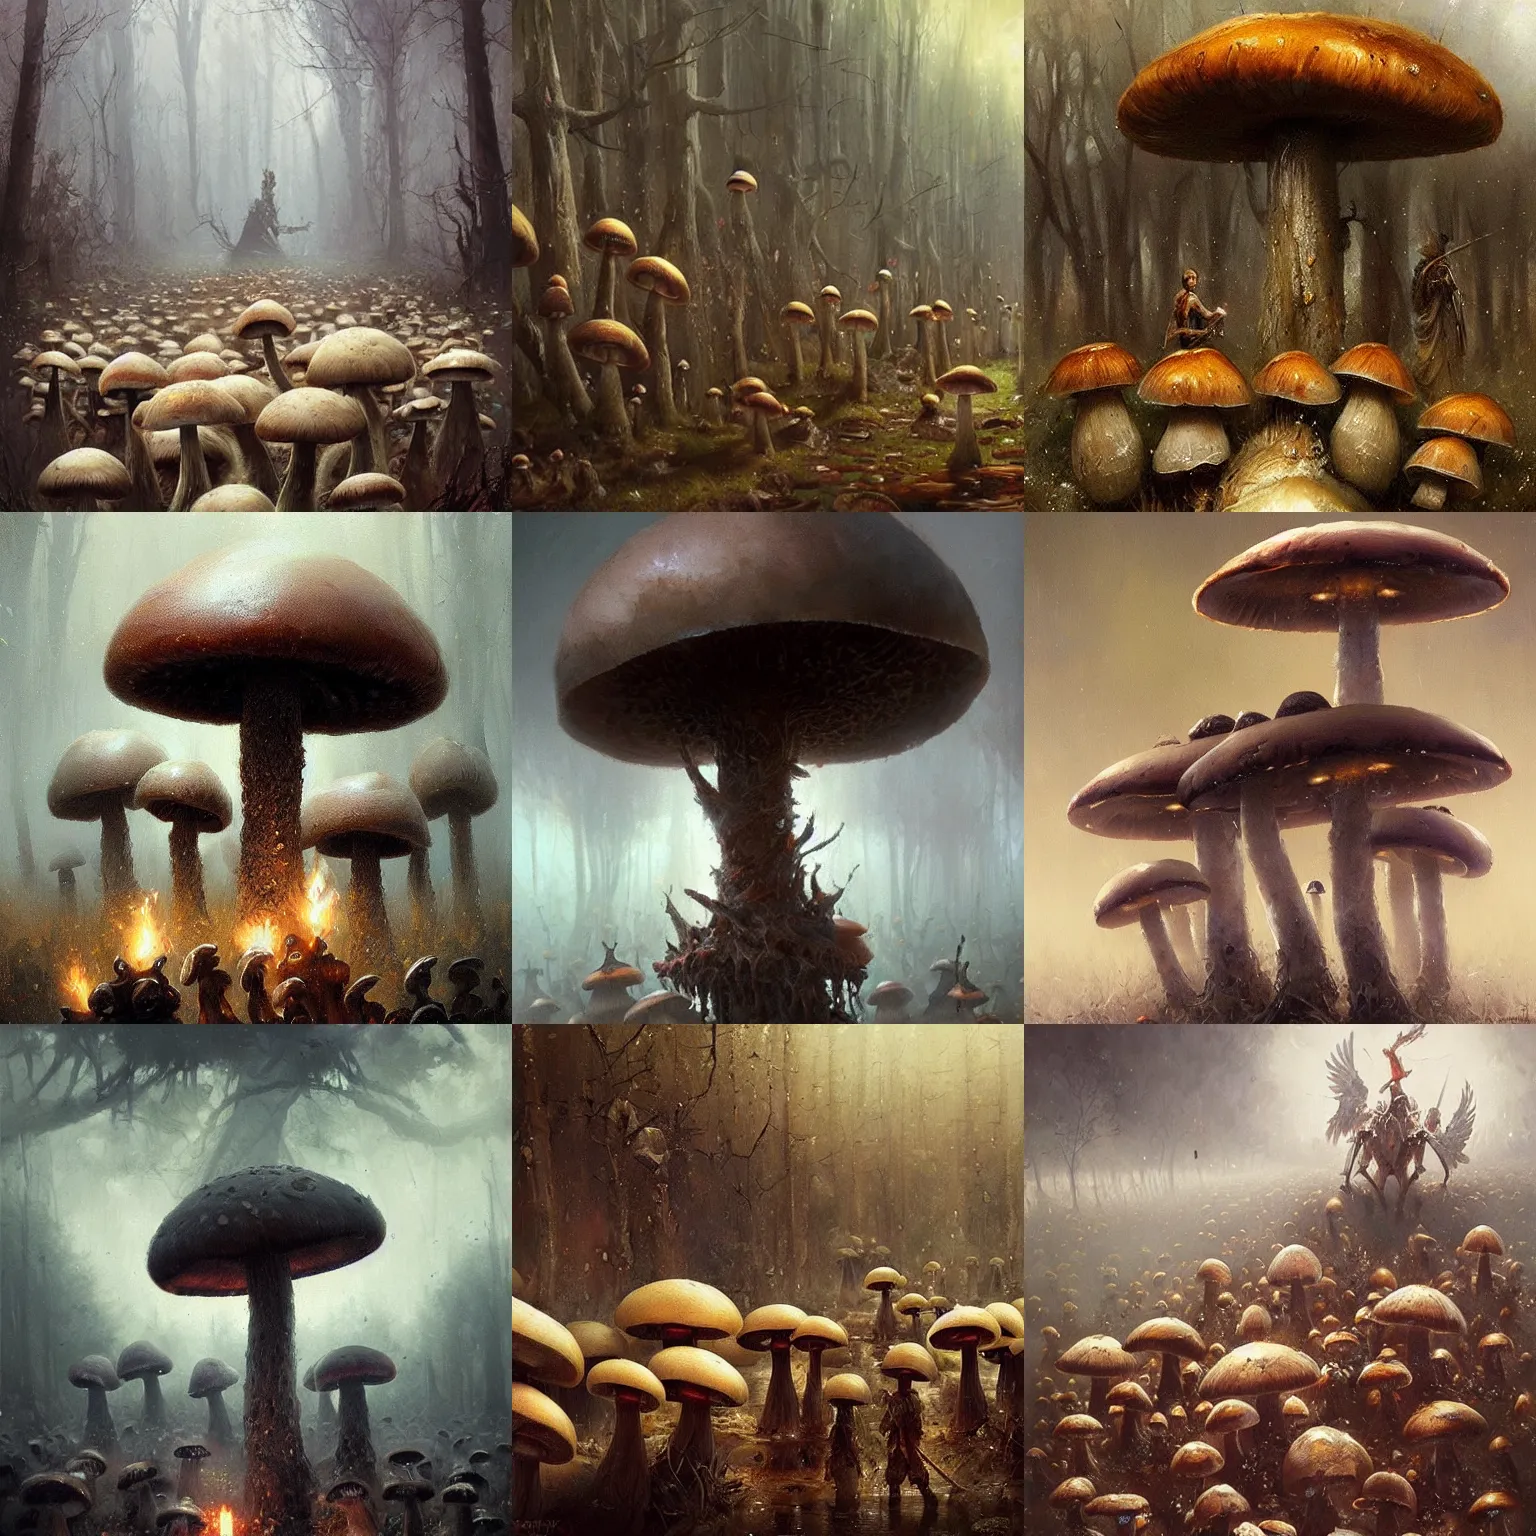 Prompt: An army of mushrooms, dark fantasy, by Greg Rutkowski, epic, awe-inspiring, oil painting, beautiful, detailed